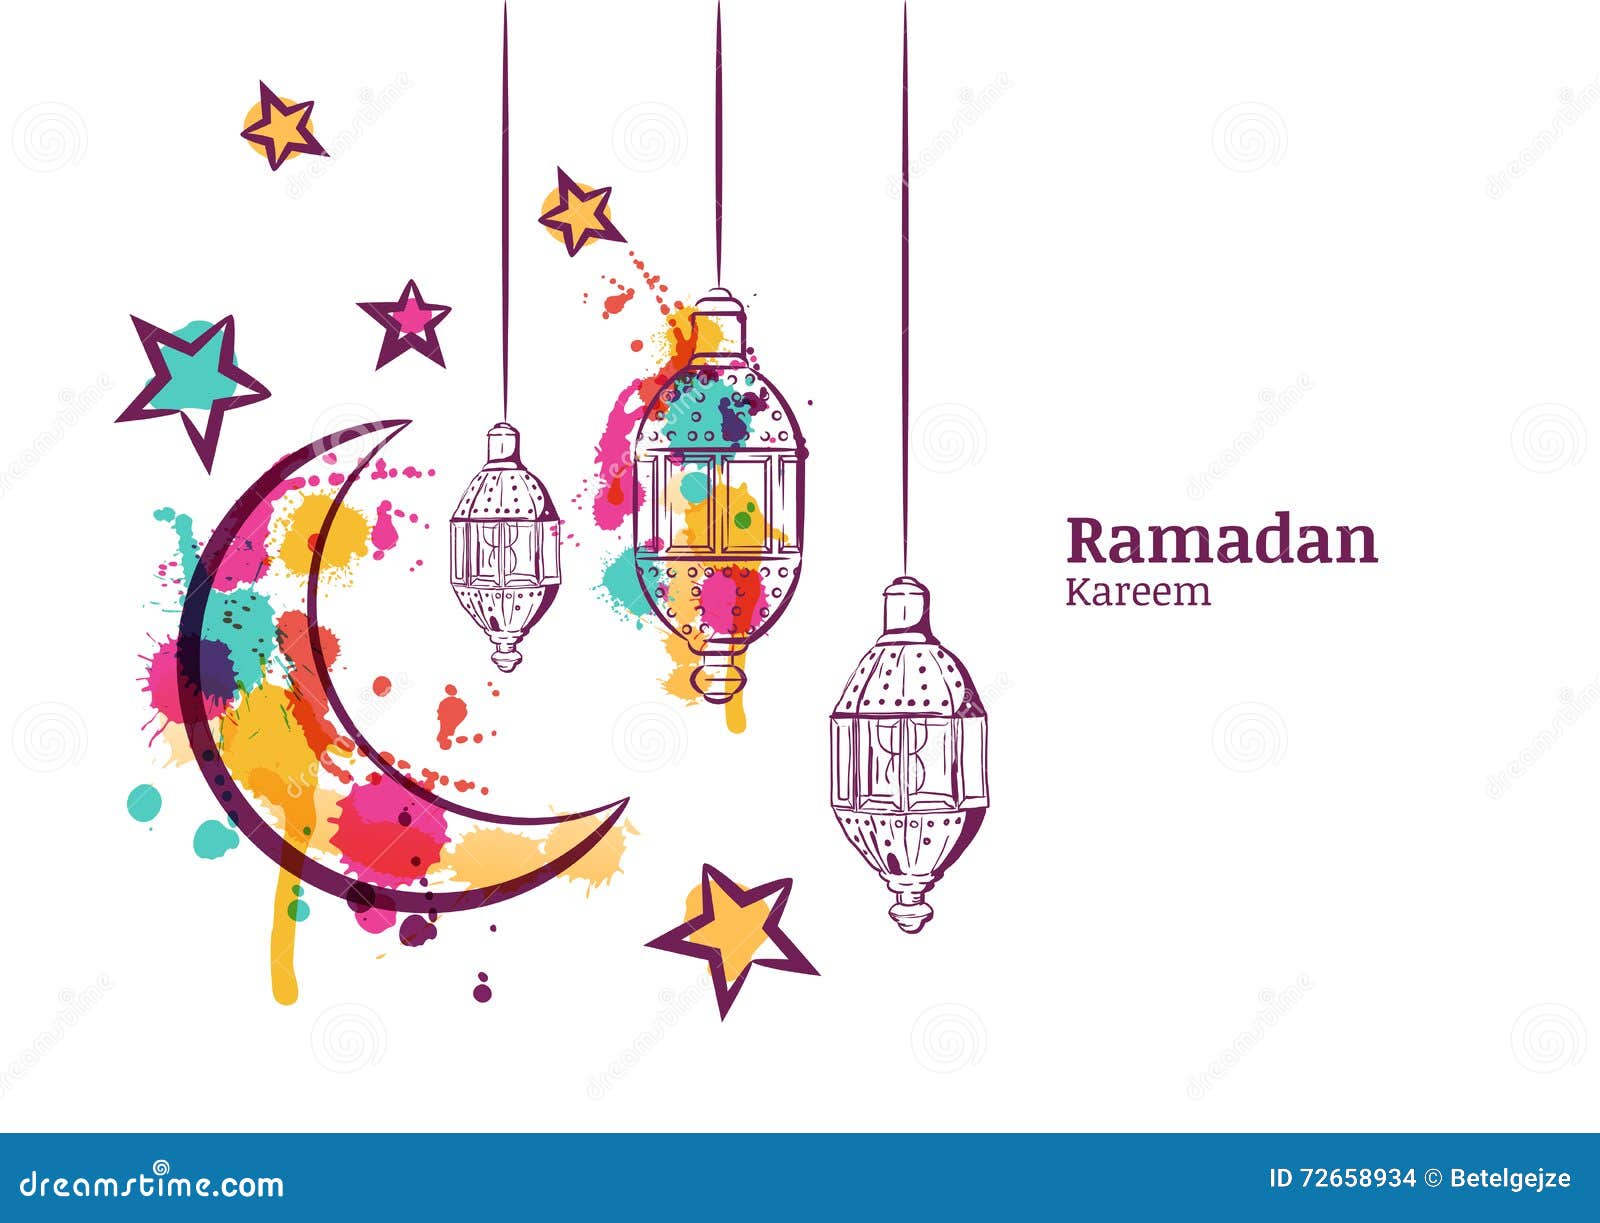 ramadan greeting card or banner horizontal background. traditional watercolor lanterns, moon and stars.